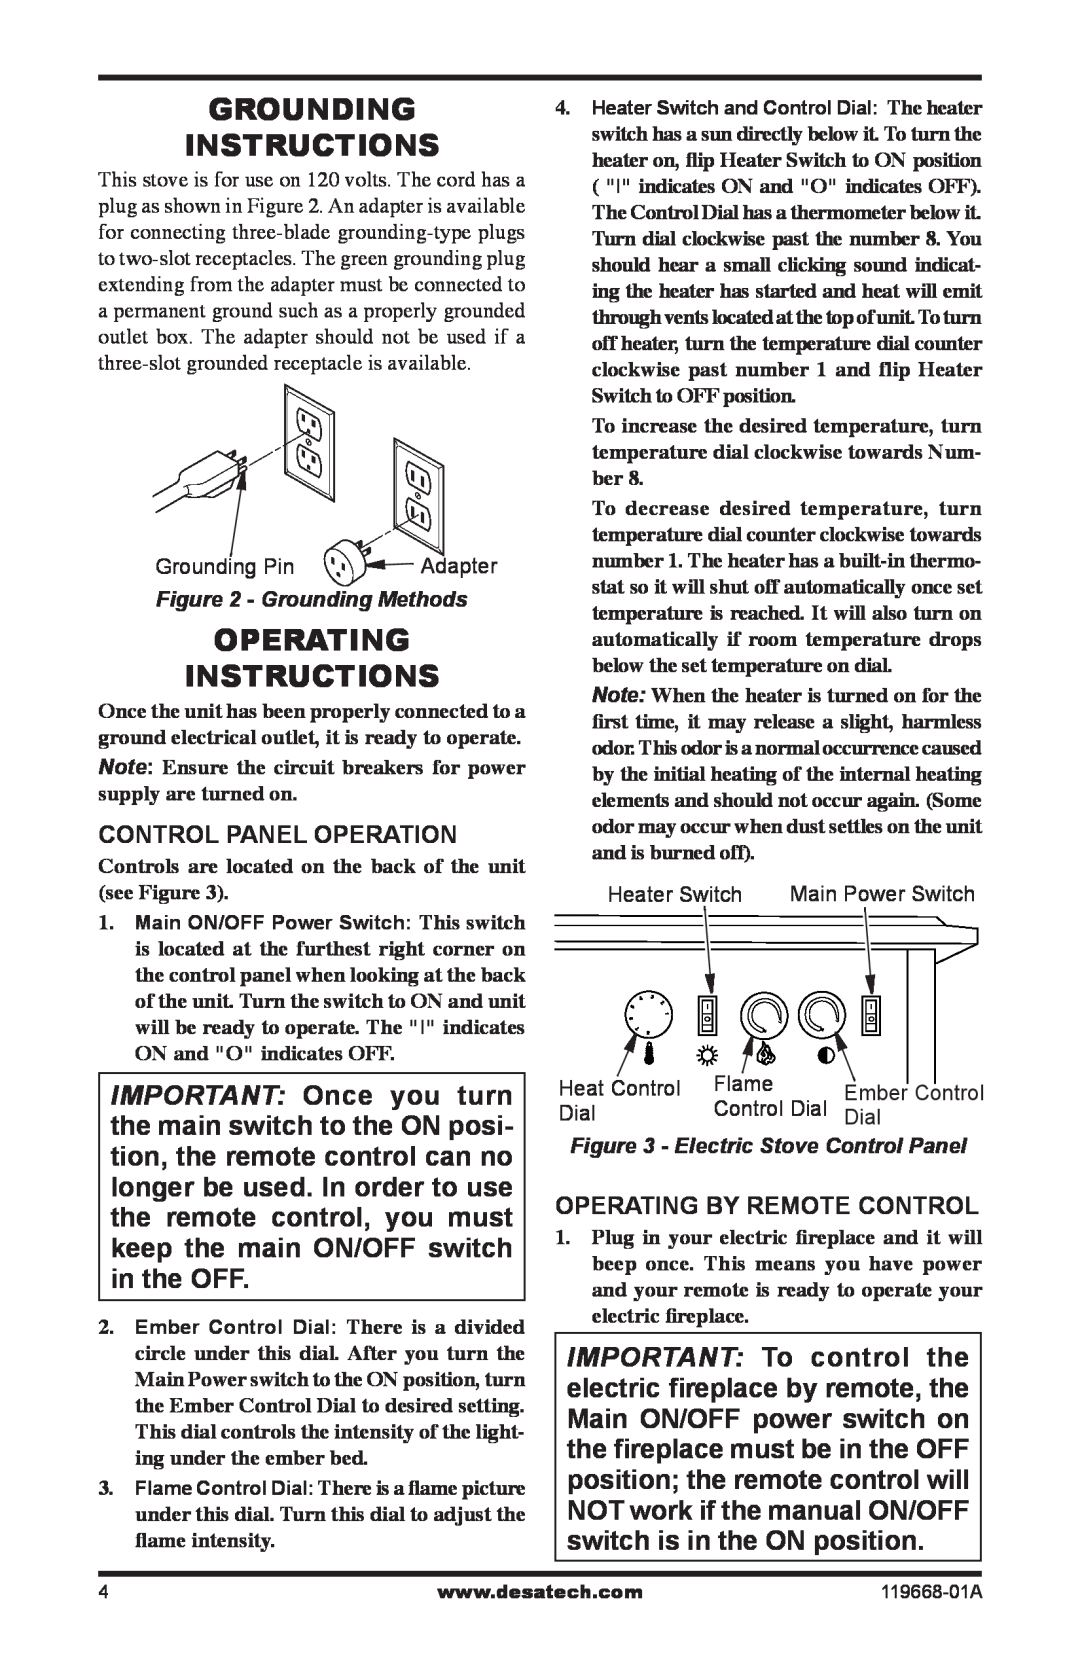 Desa VESBMRA Grounding instructions, Operating Instructions, Control Panel Operation, Operating by remote control 